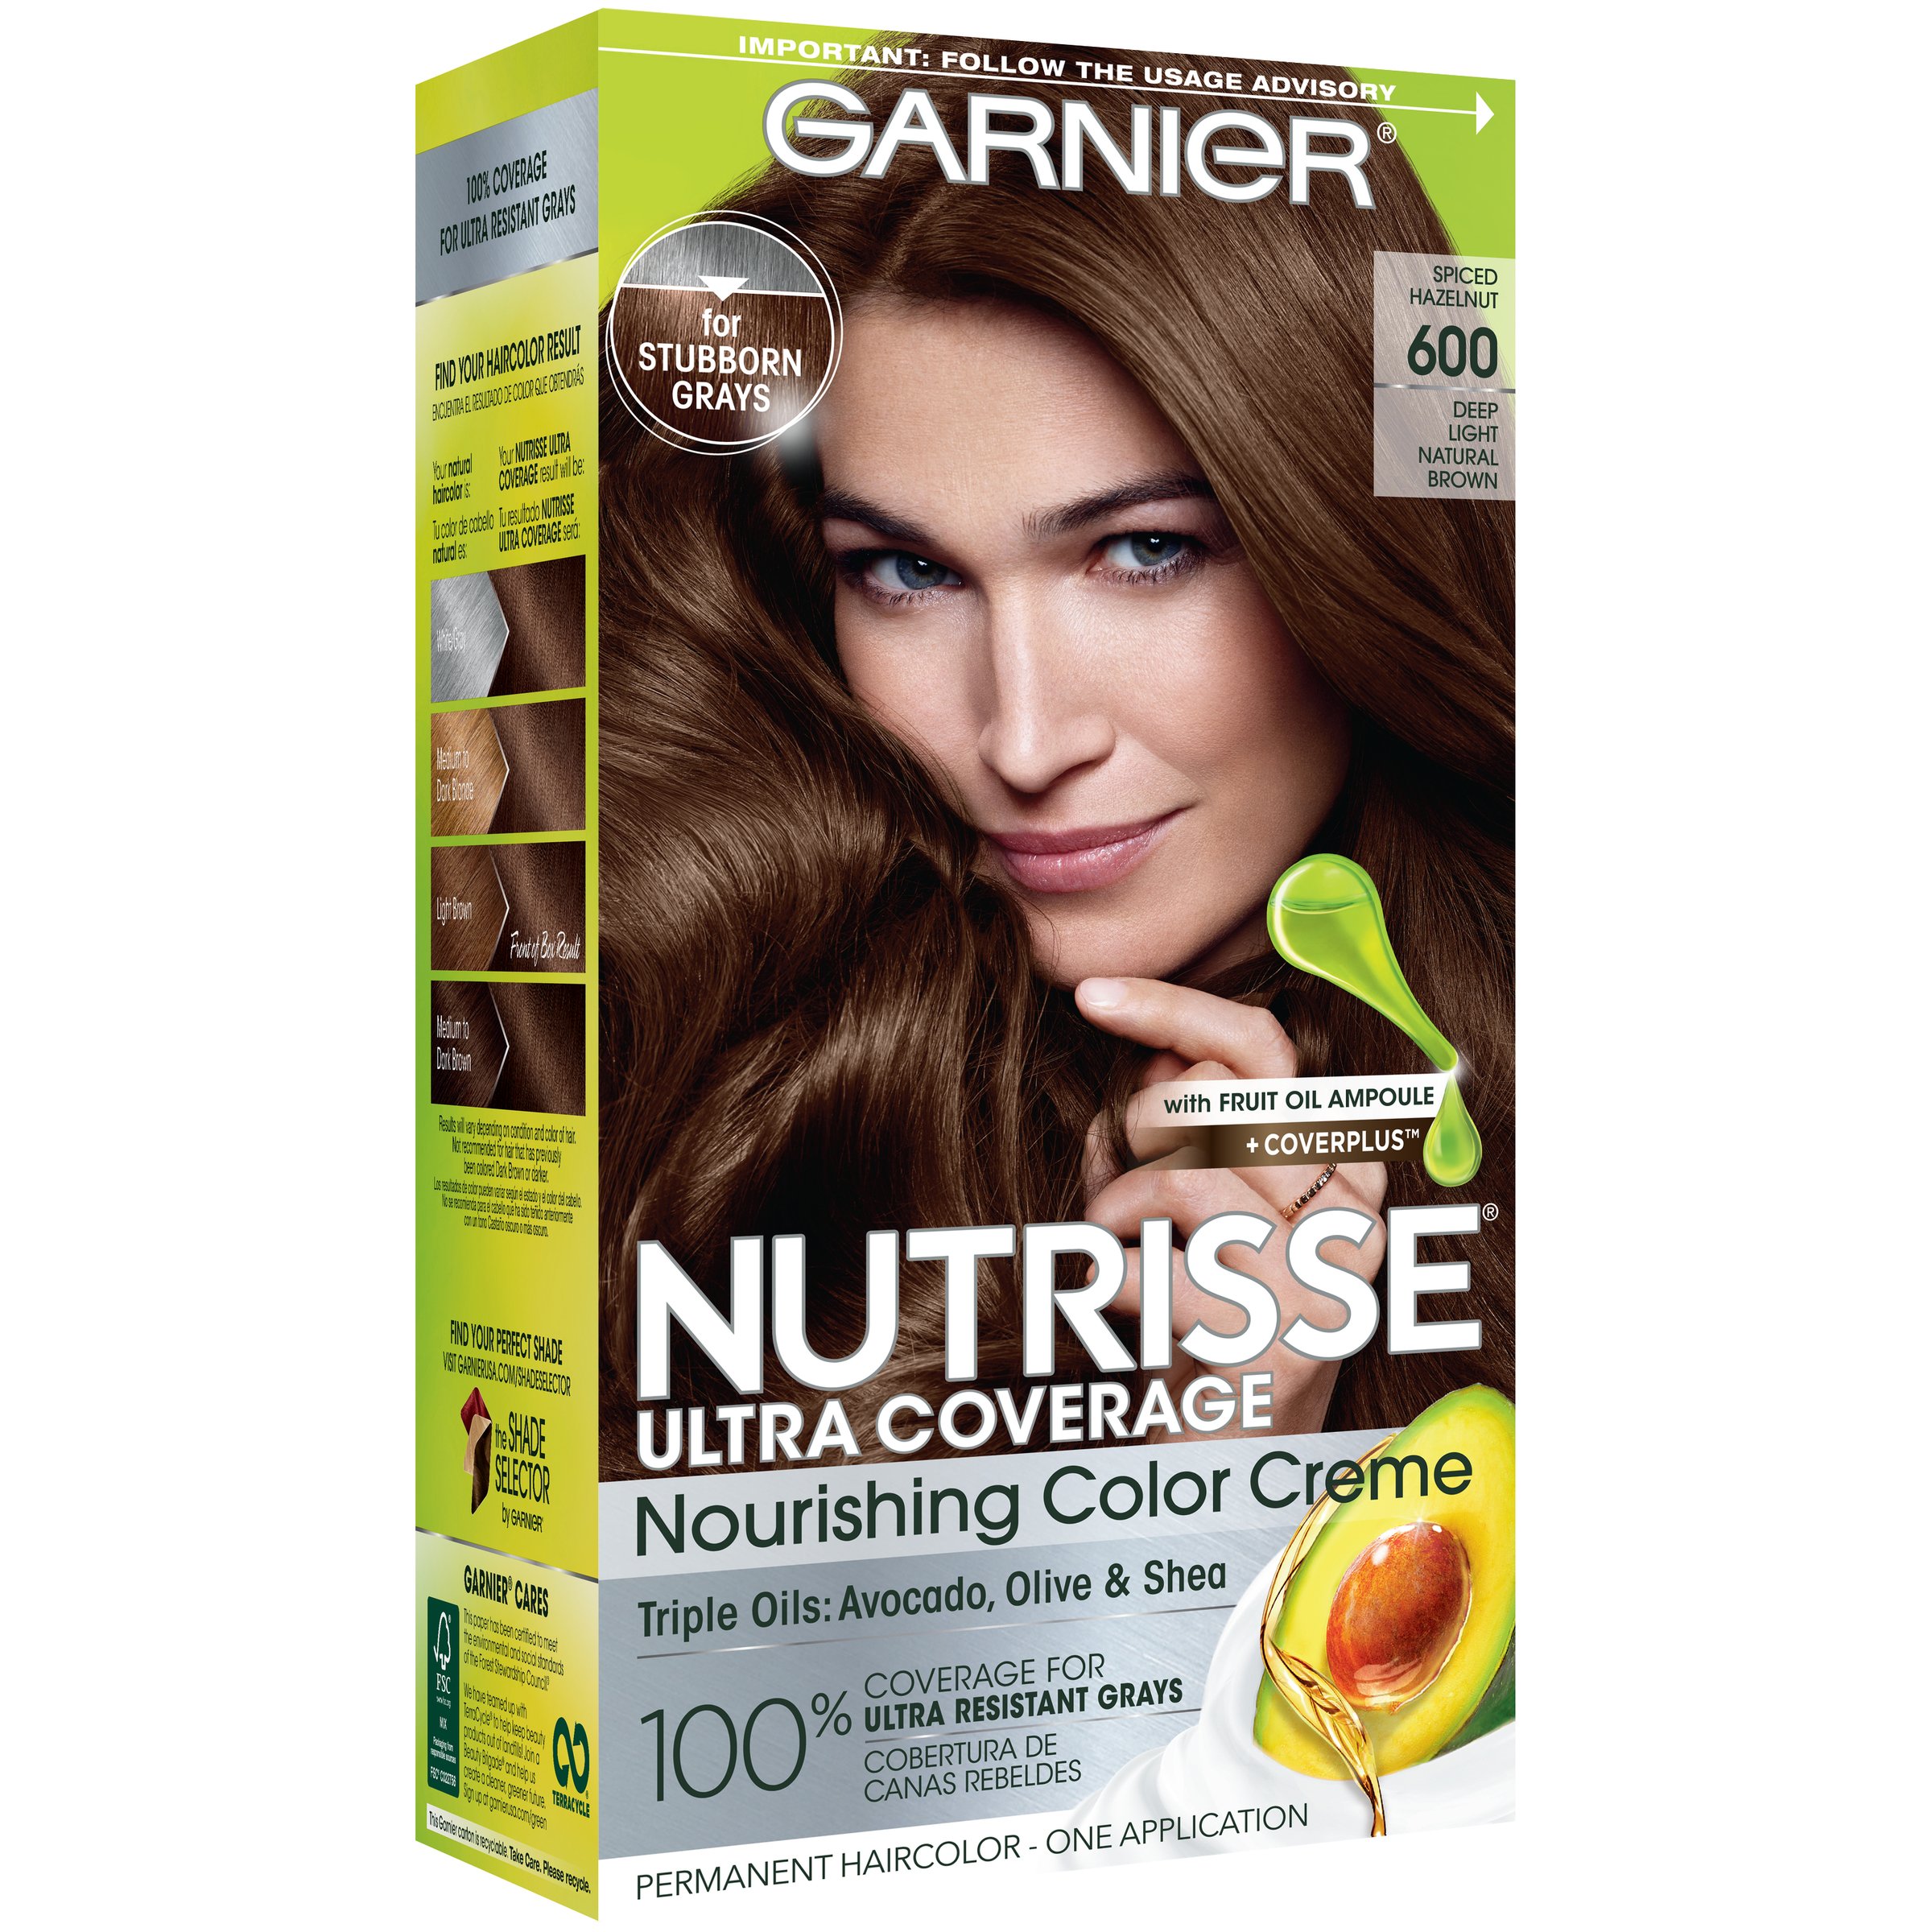 Garnier Nutrisse Ultra Coverage Nourishing Permanent Hair Color Creme for  Stubborn Gray Coverage Deep Light Natural Brown (Spiced Hazelnut) 600 -  Shop Hair Color at H-E-B